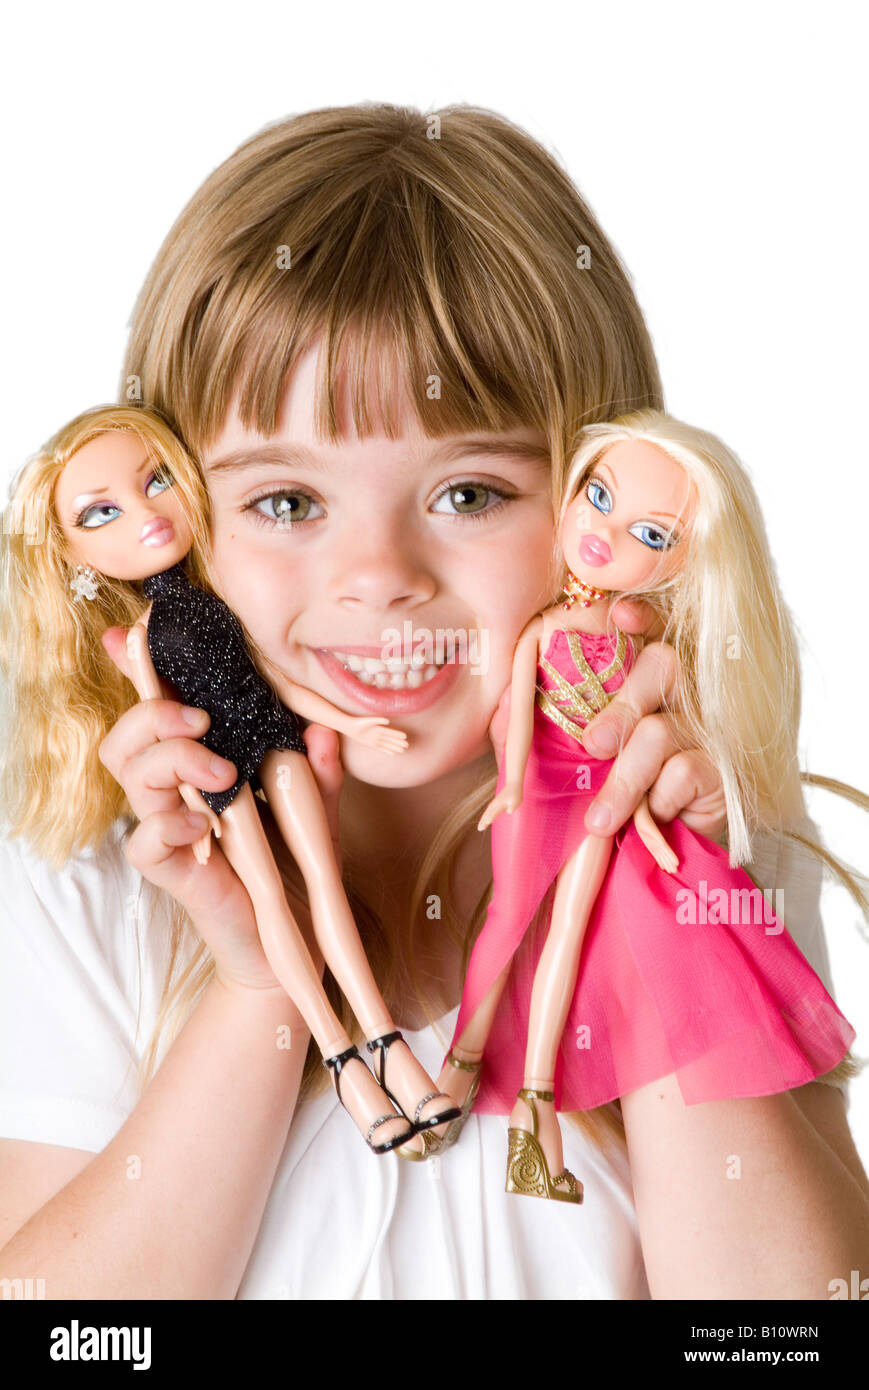 bratz doll toy young girl body image cartoon distorted bimbo fashion trendy industry marketing Stock Photo